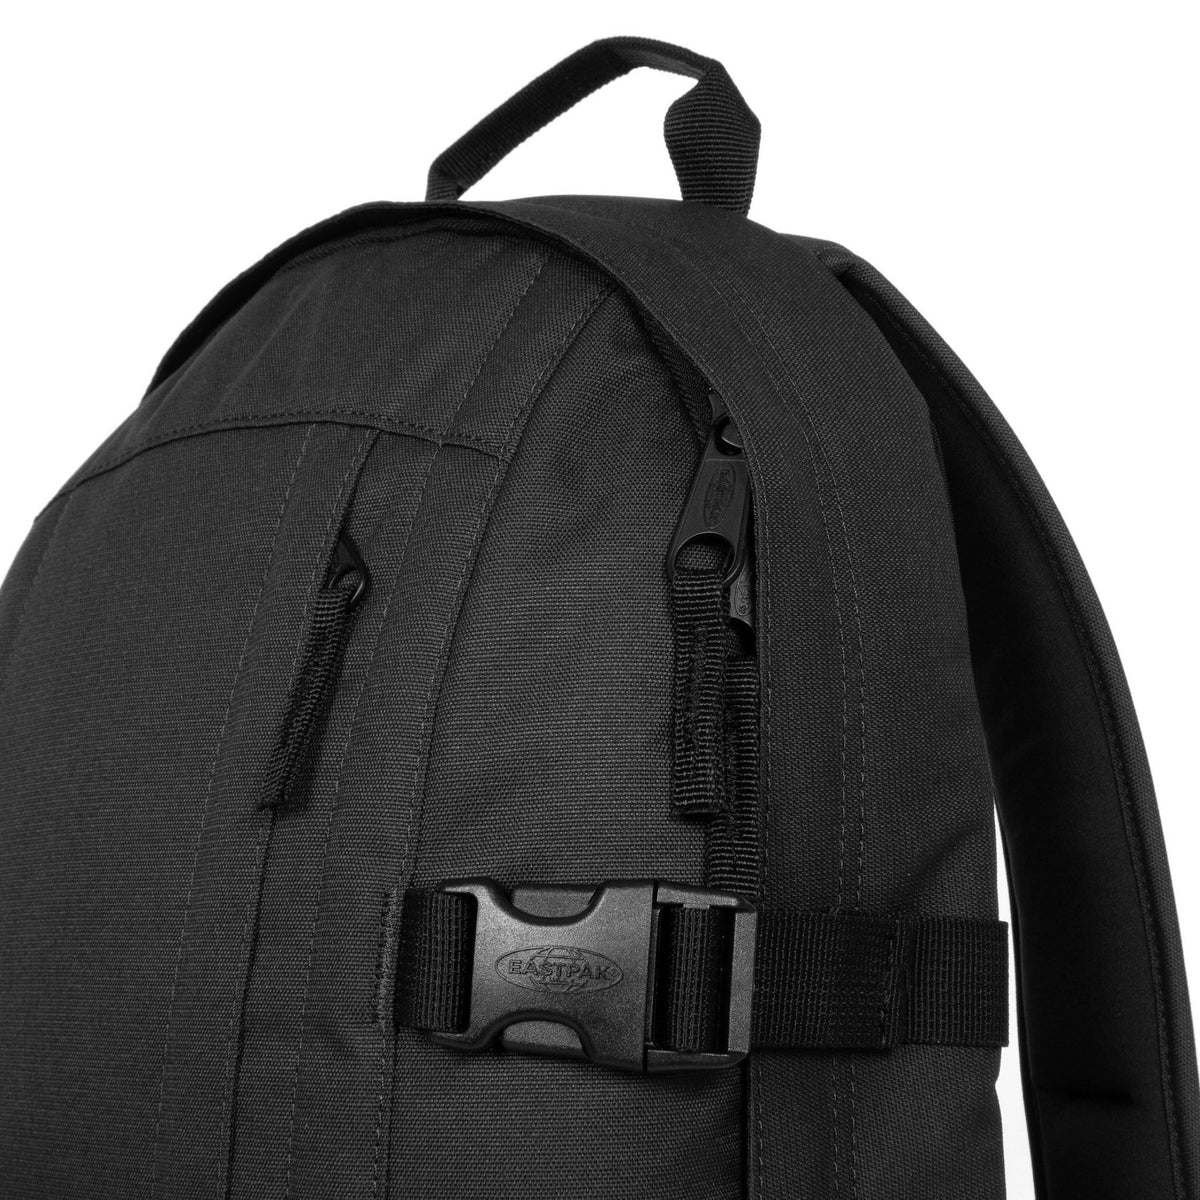 Eastpak Floid Backpack - Mono Black2